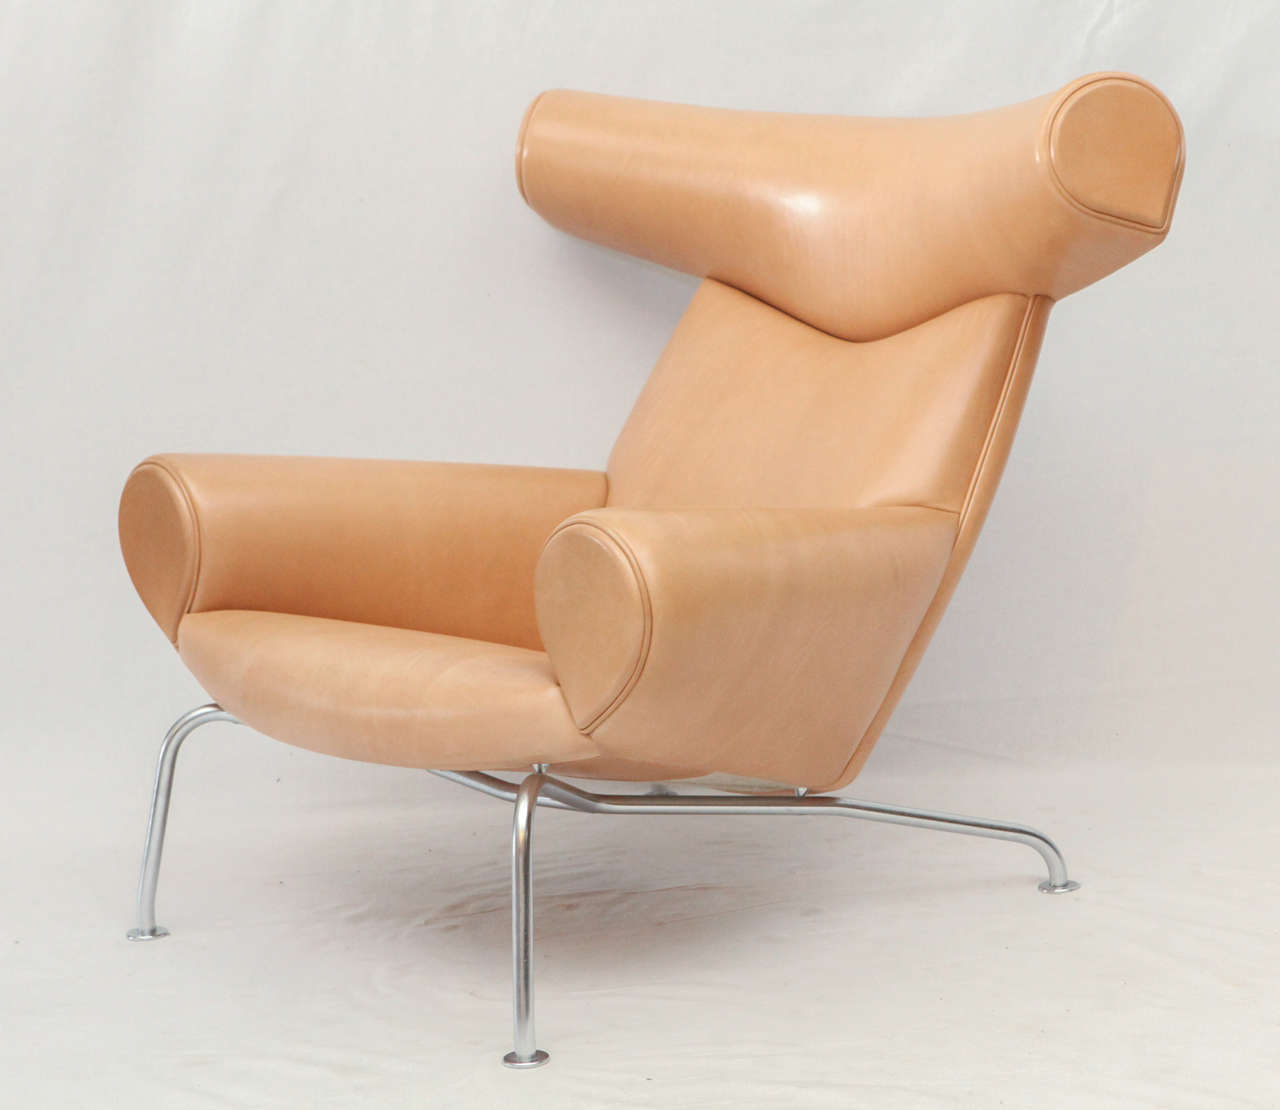 Hans Wegner ox chair designed in 1960.  This example was produced by Erik Jorgensen Mobelfabrik.